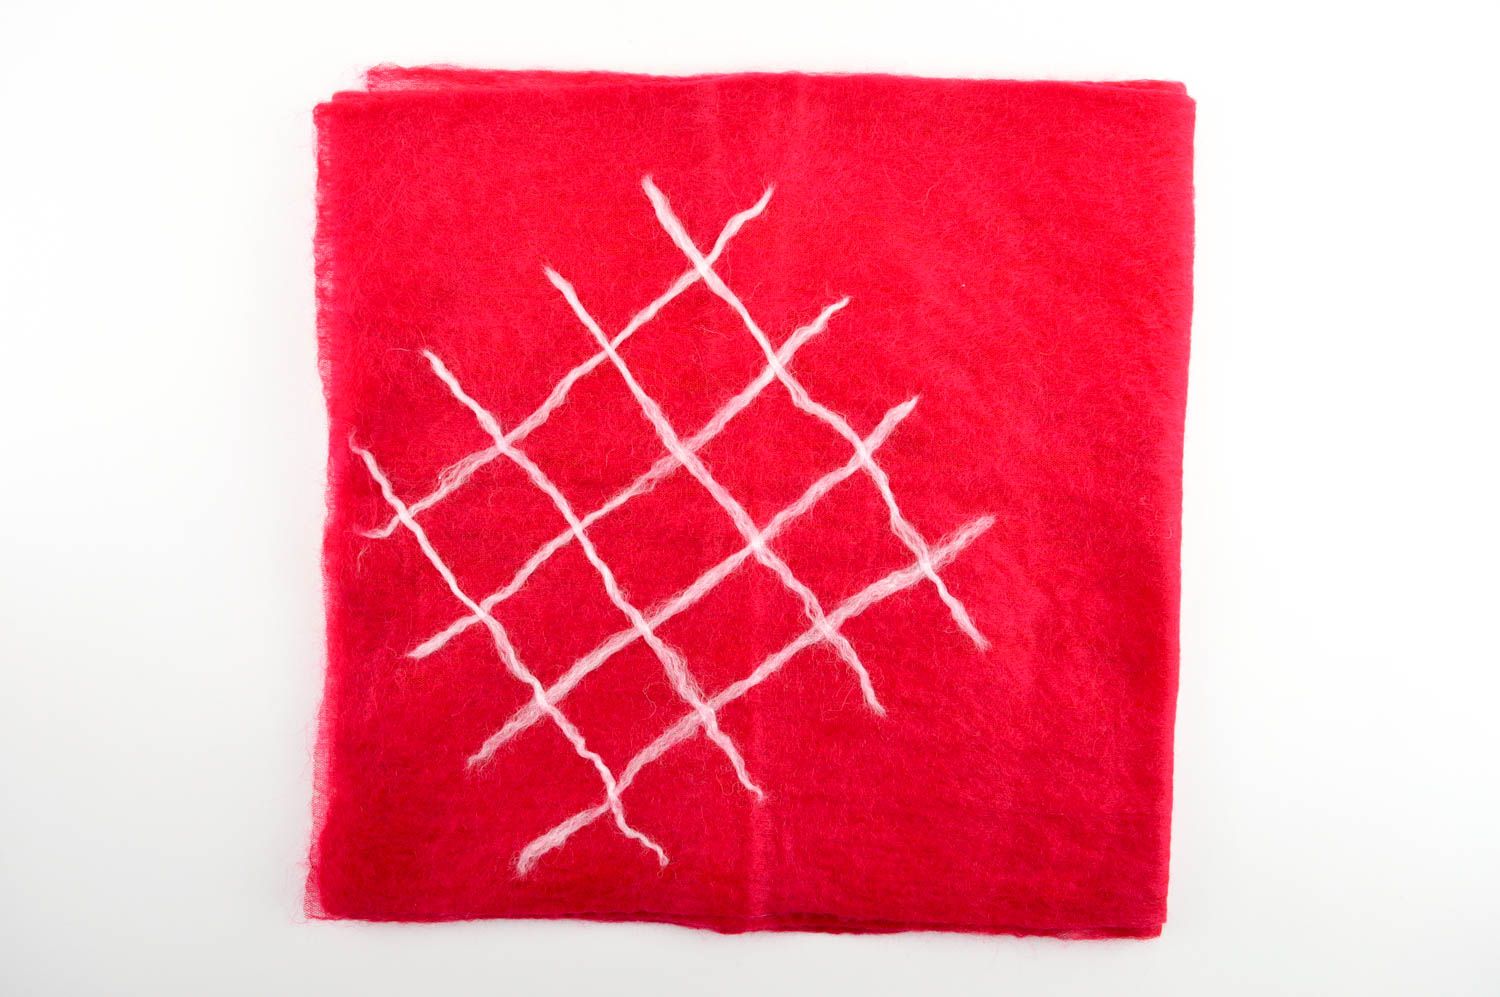 Handmade gefilzter Schal Frauen Accessoire roter Schal aus Wolle gemustert grell foto 3